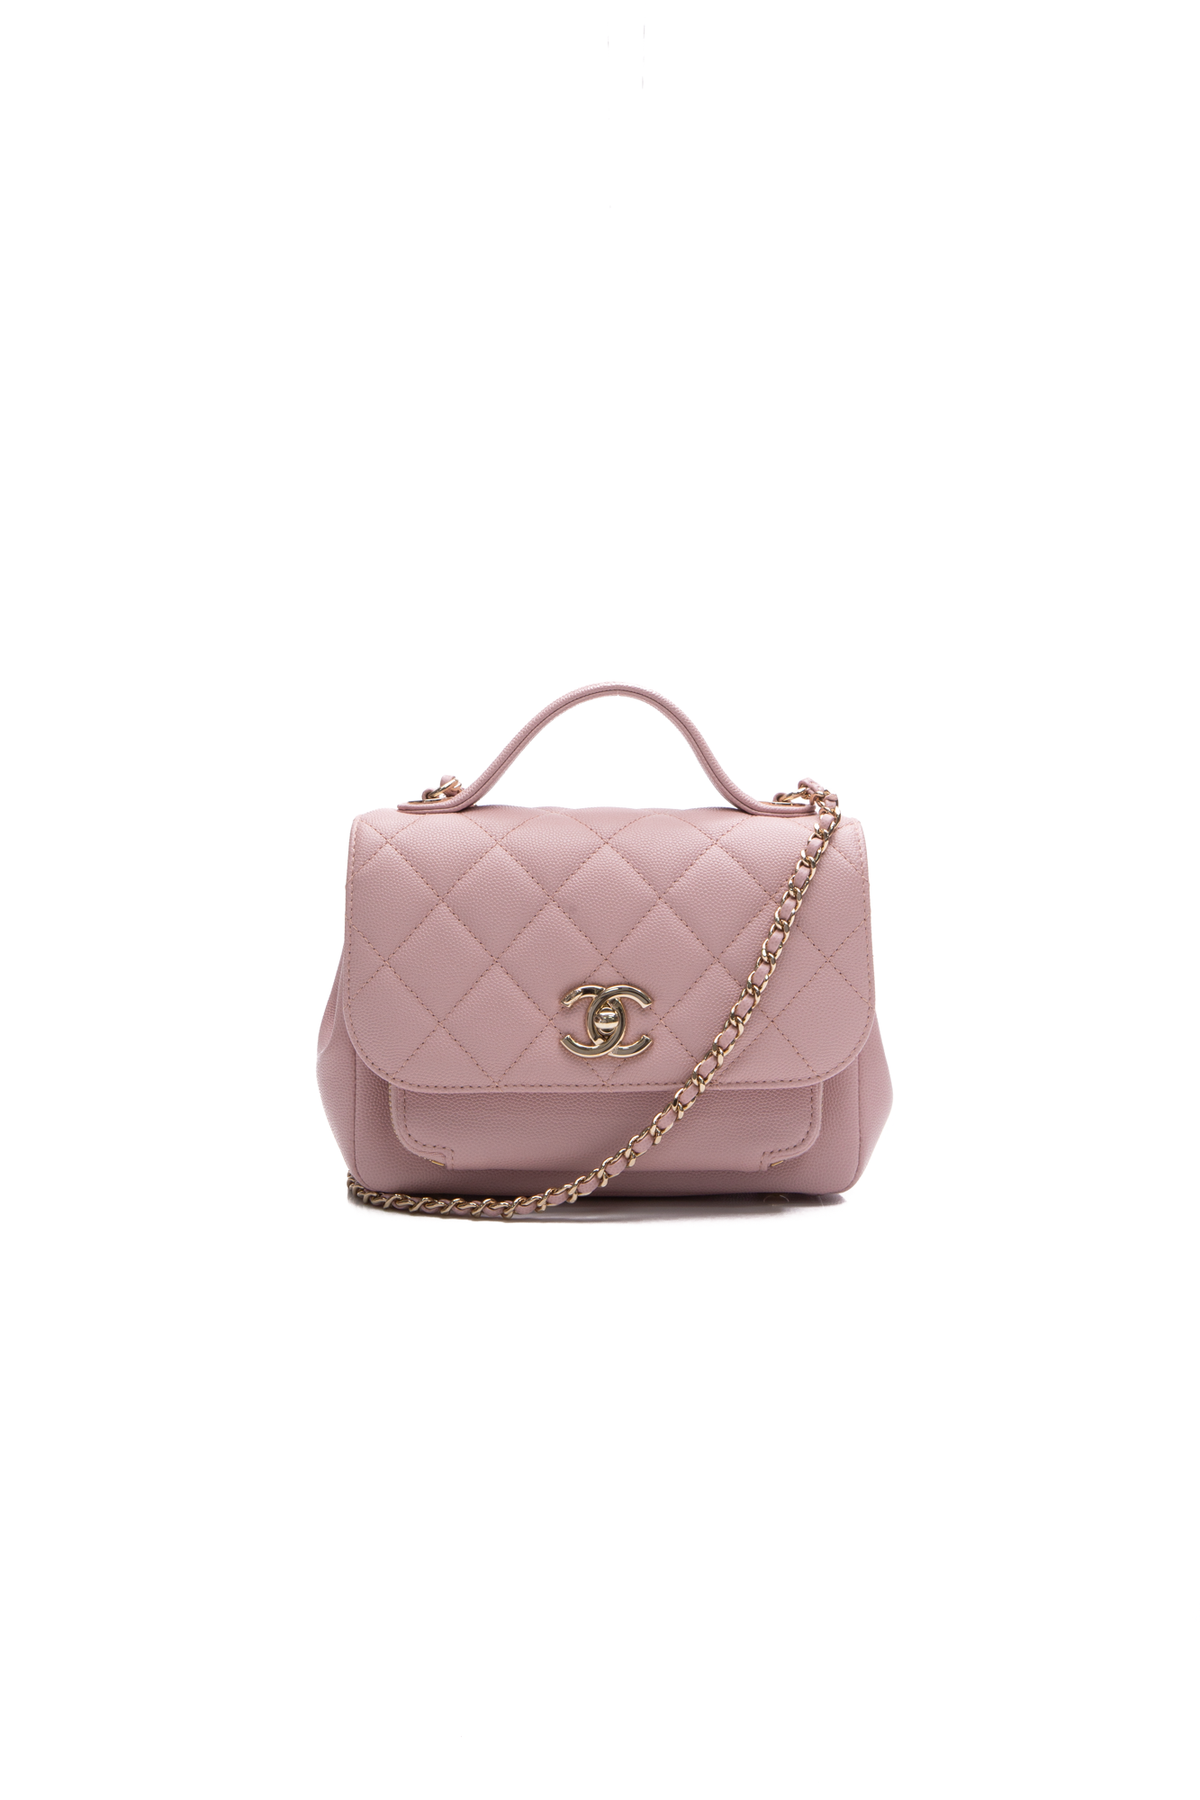 Chanel Business Affinity Bag